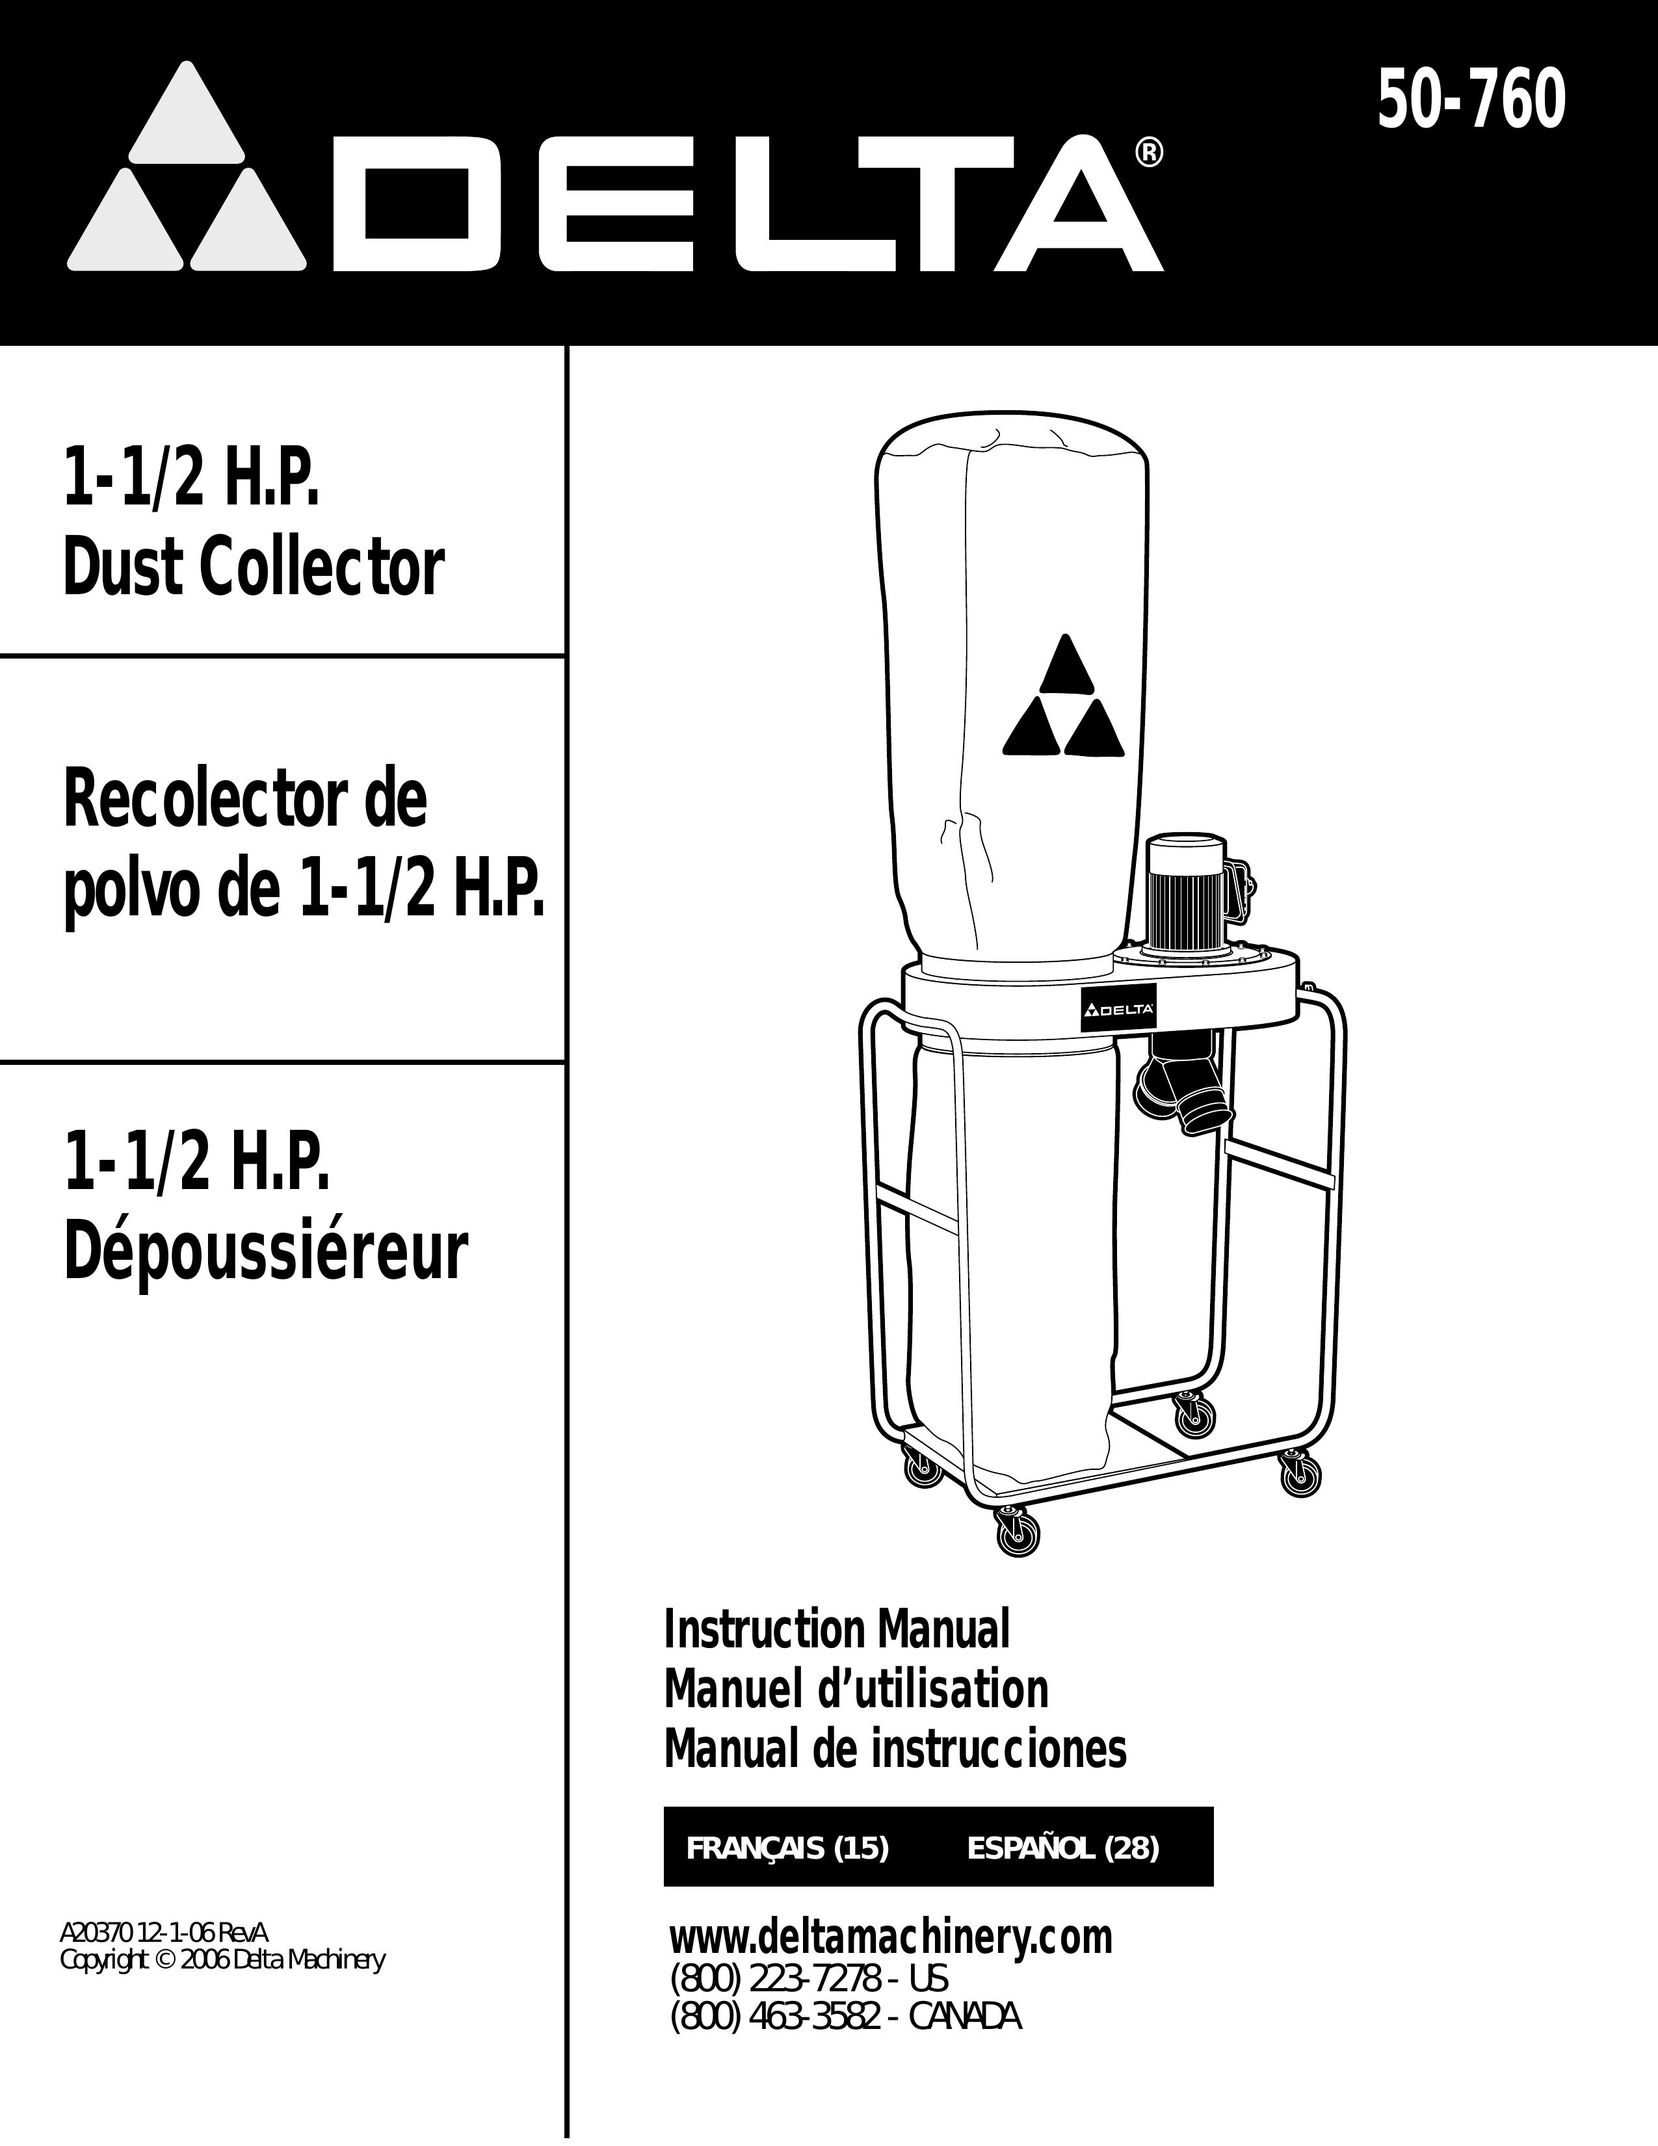 DeWalt 50-760 Dust Collector User Manual